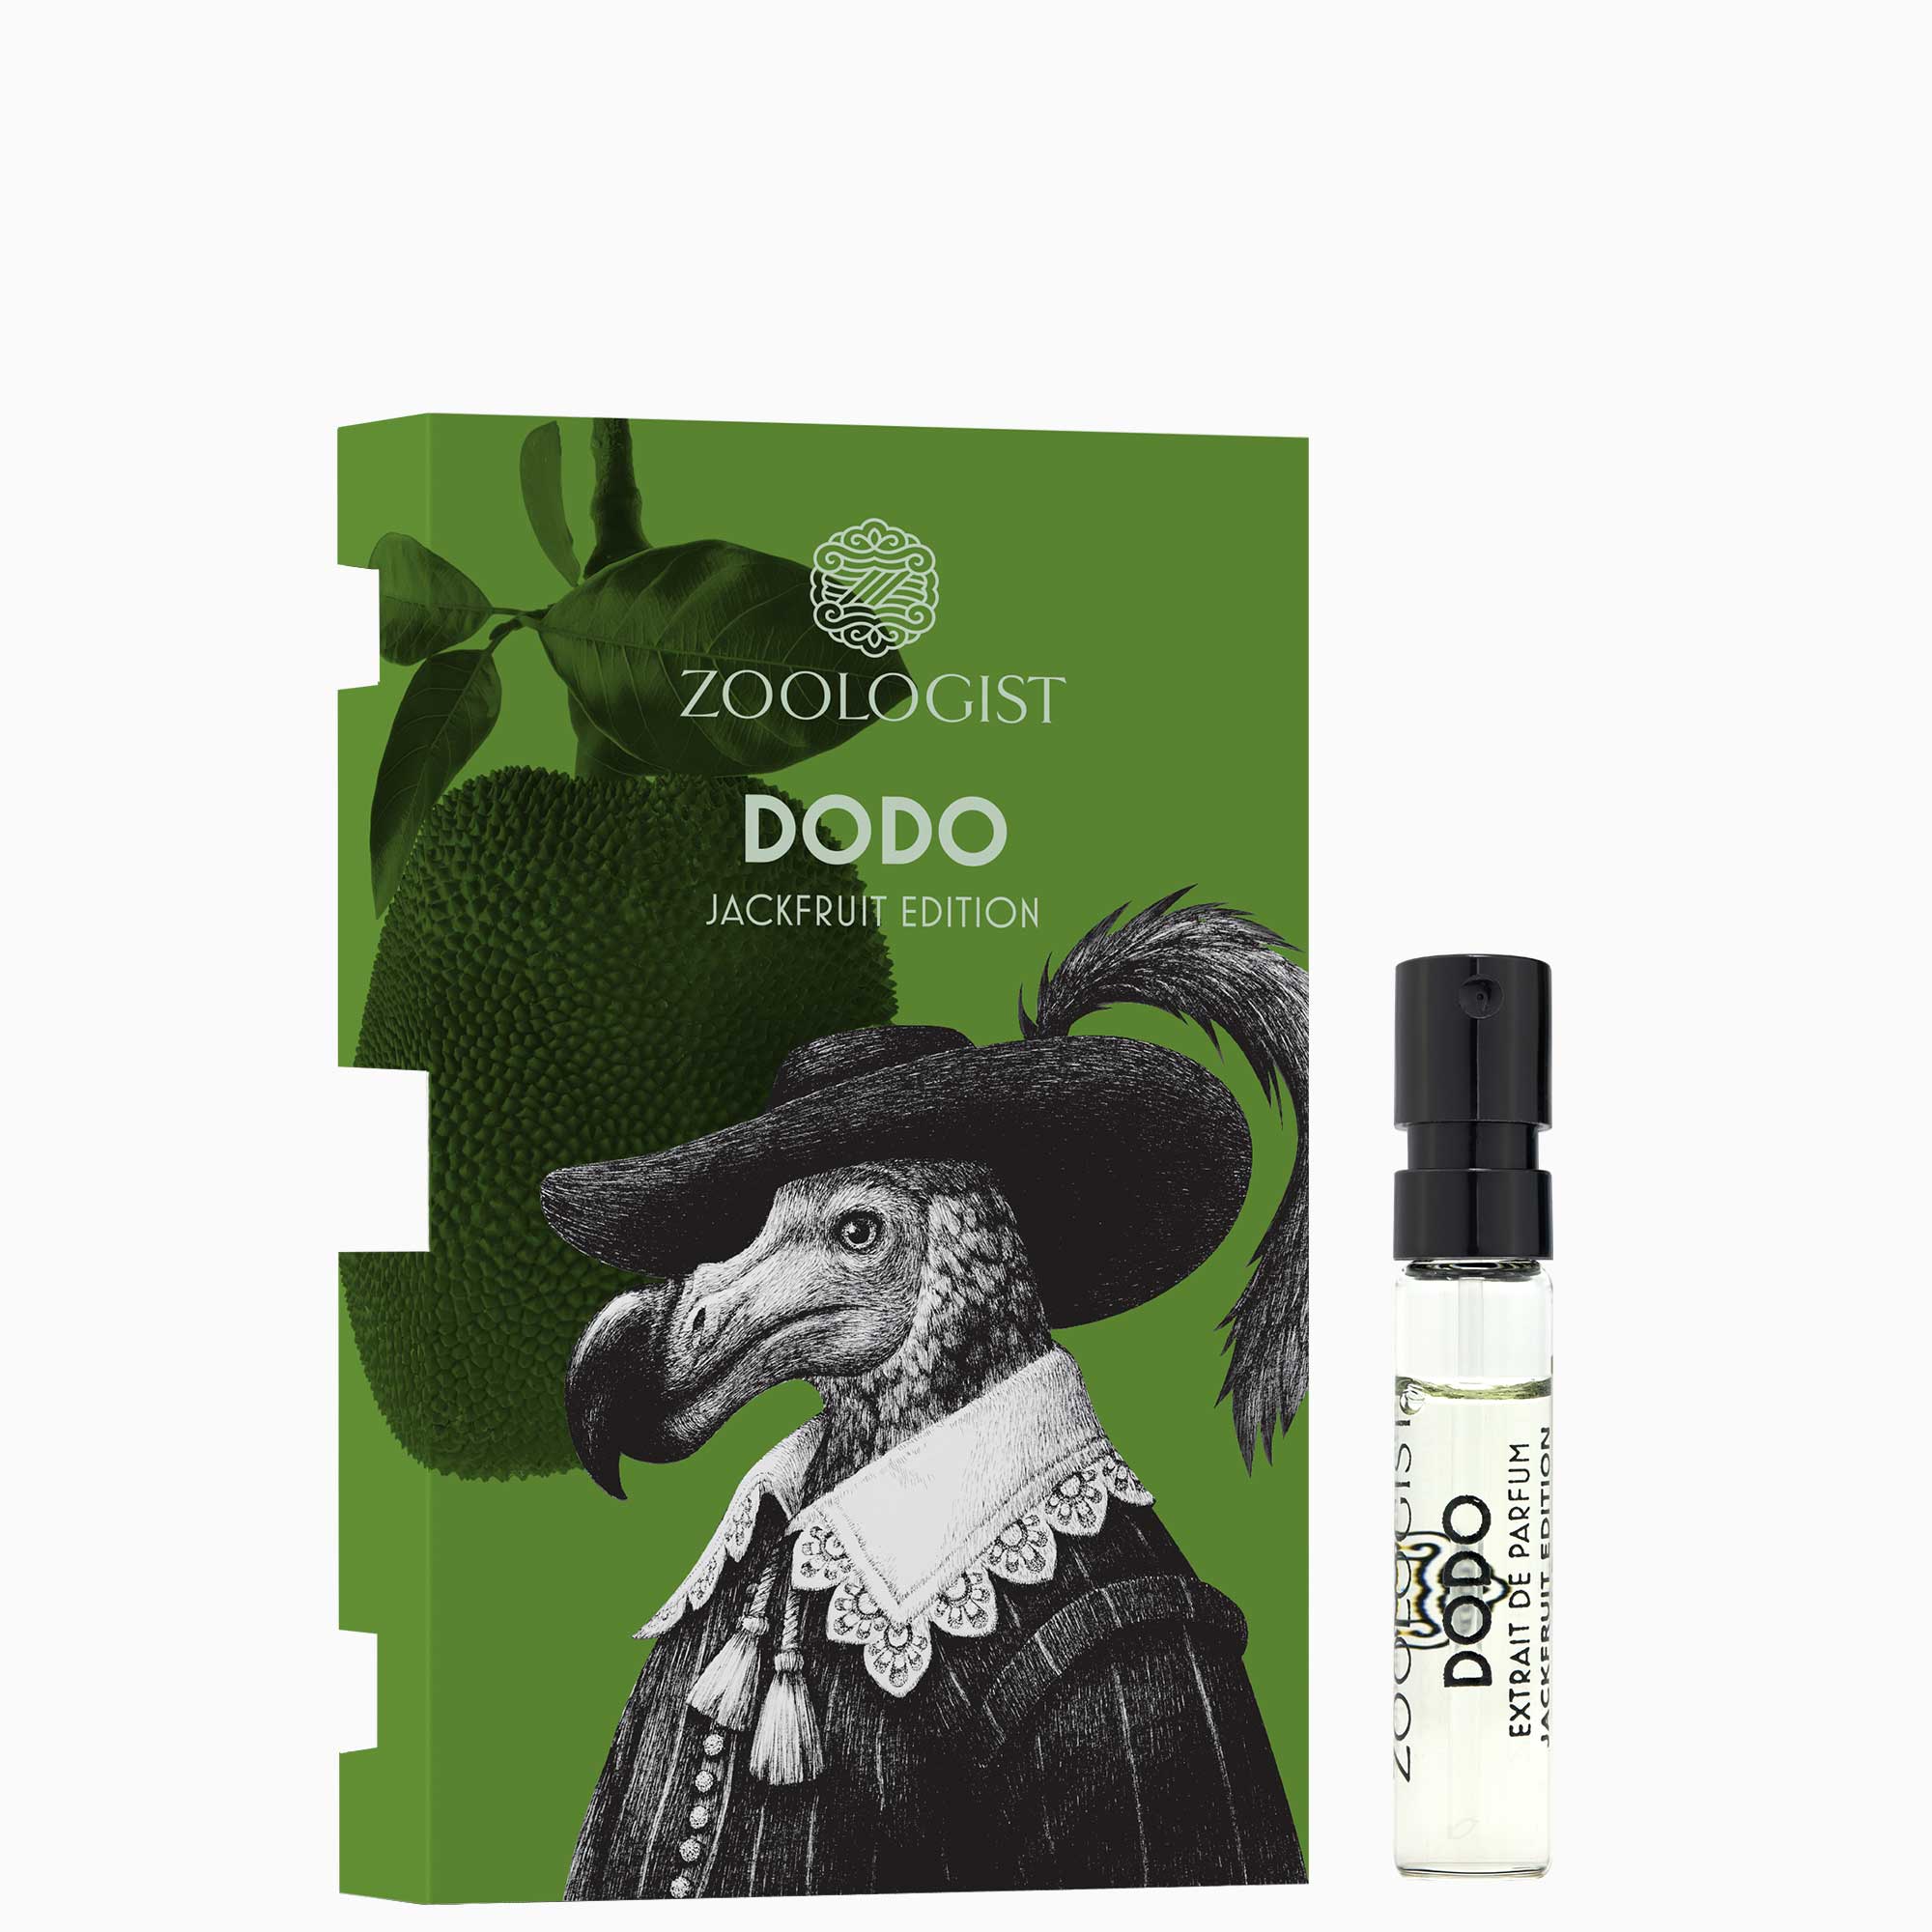 Zoologist Dodo Jackfruit Edition Sample